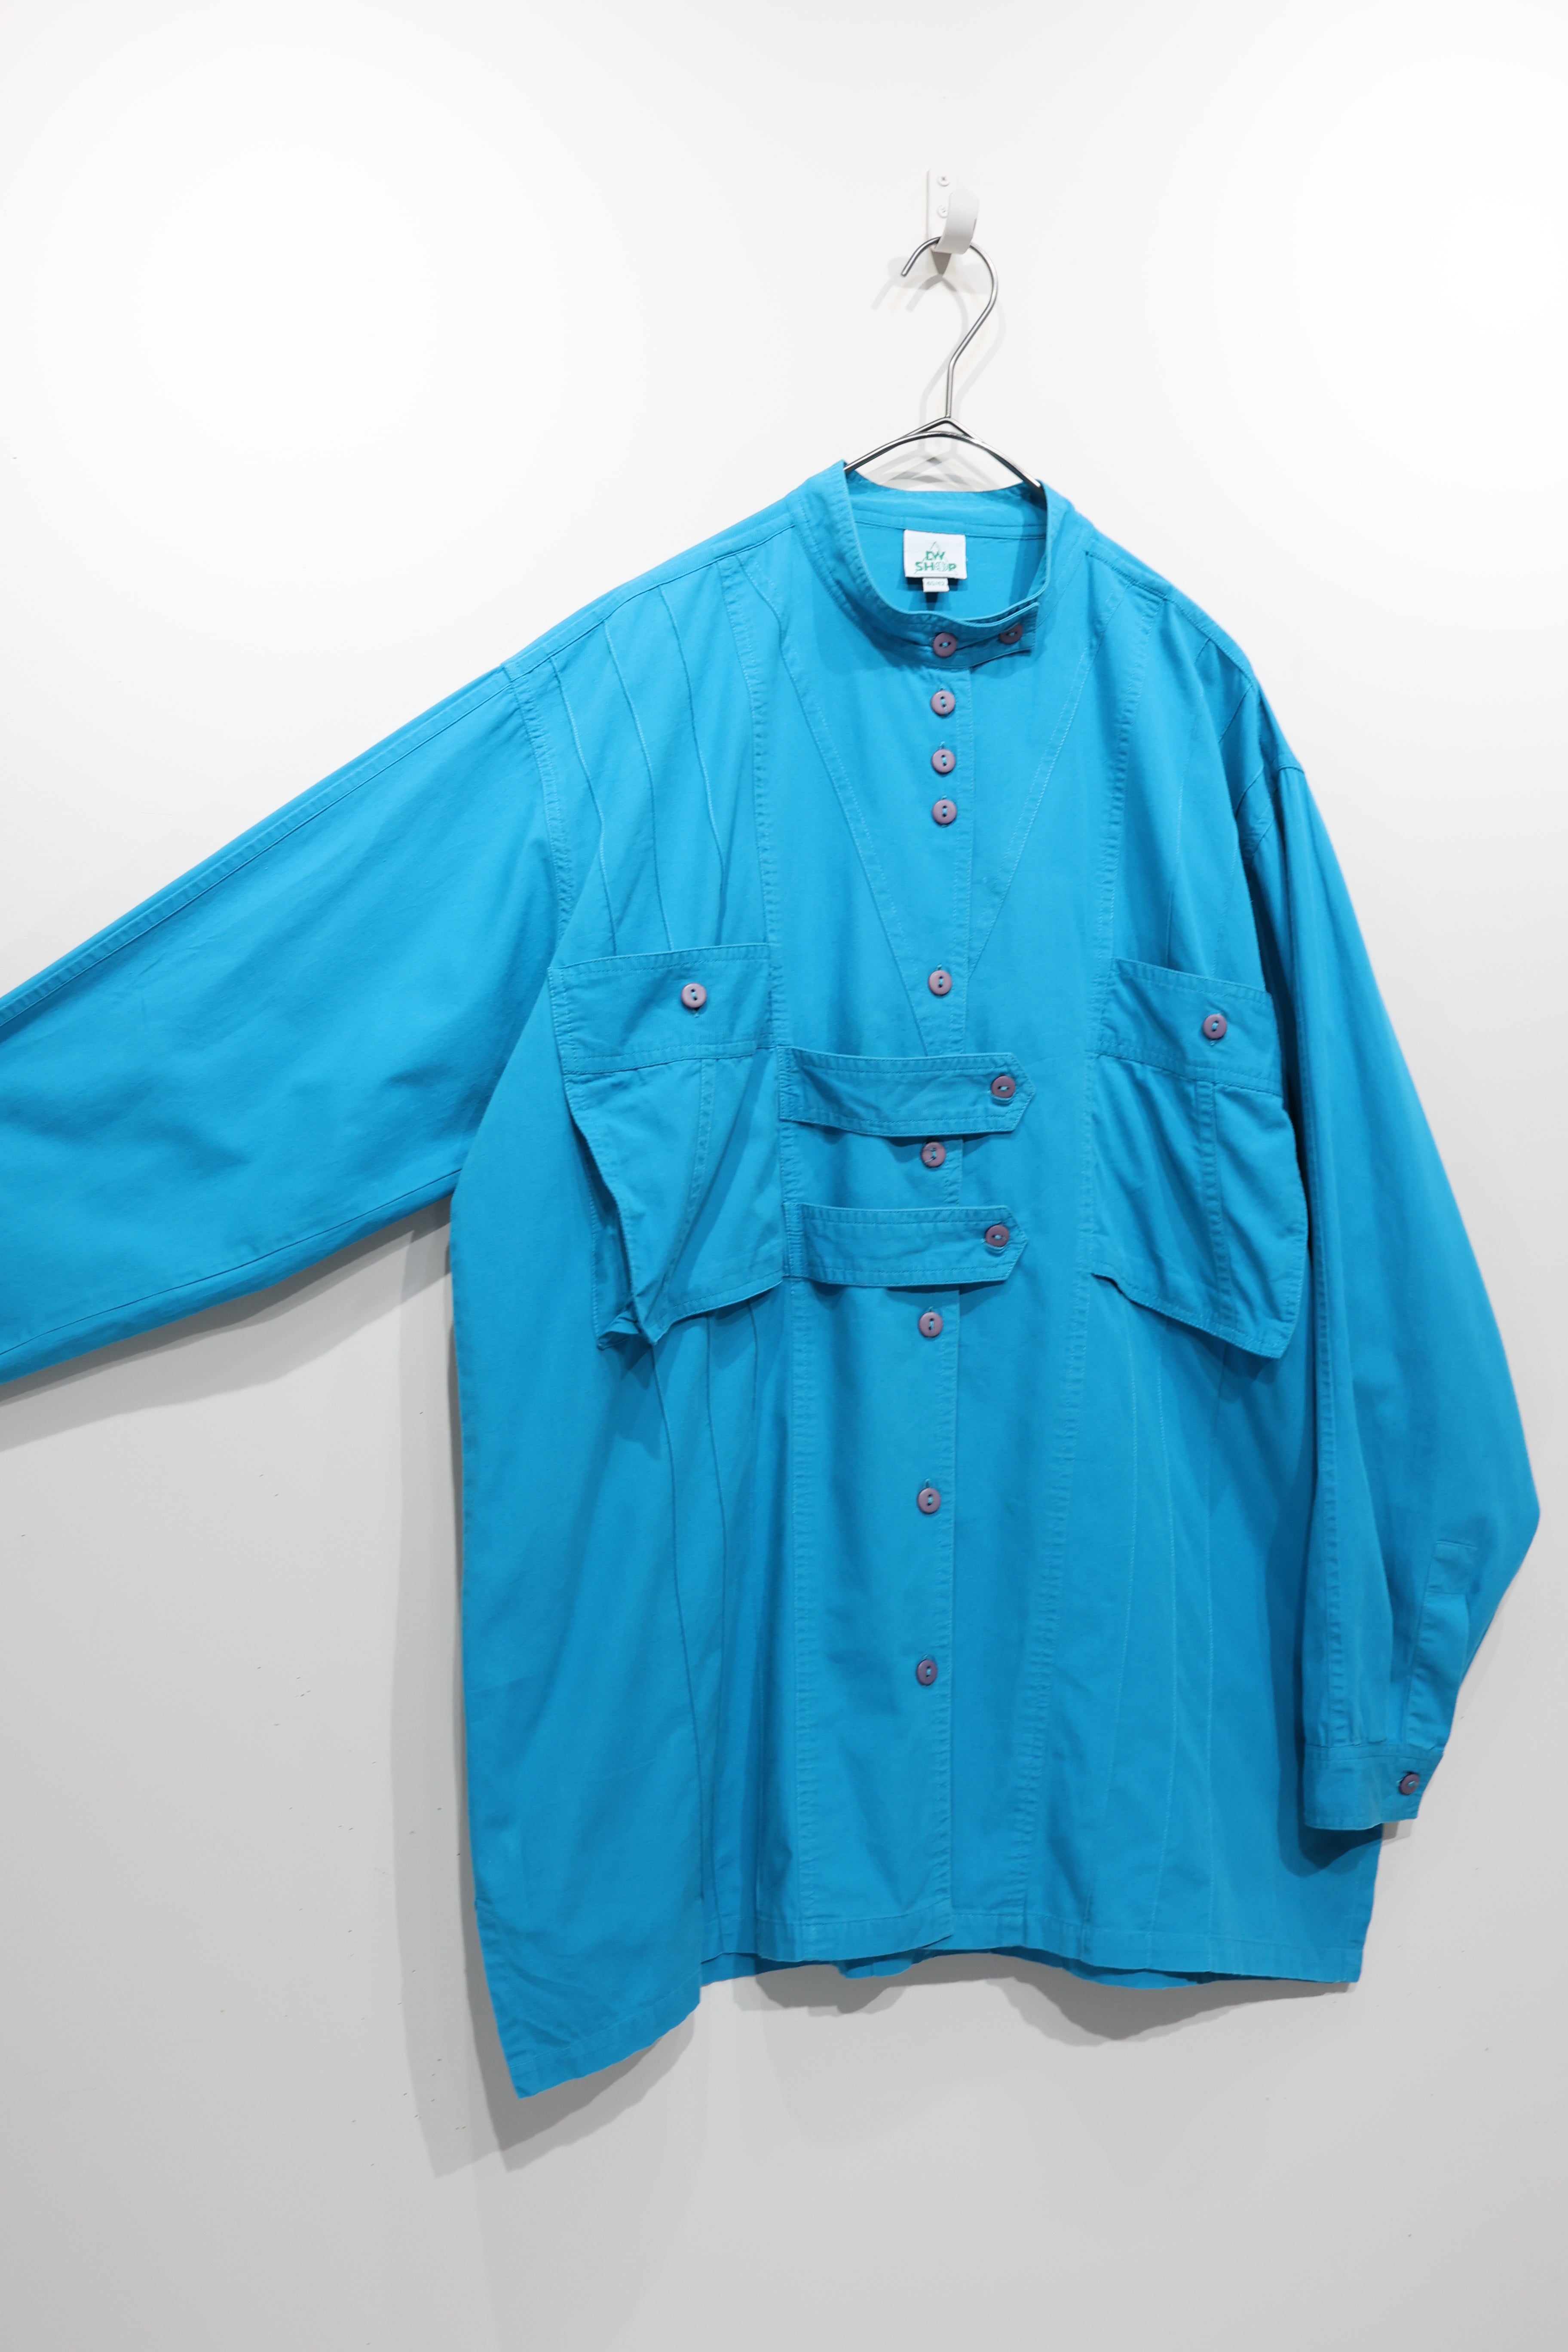 turquoise blue cotton gimmick shirt